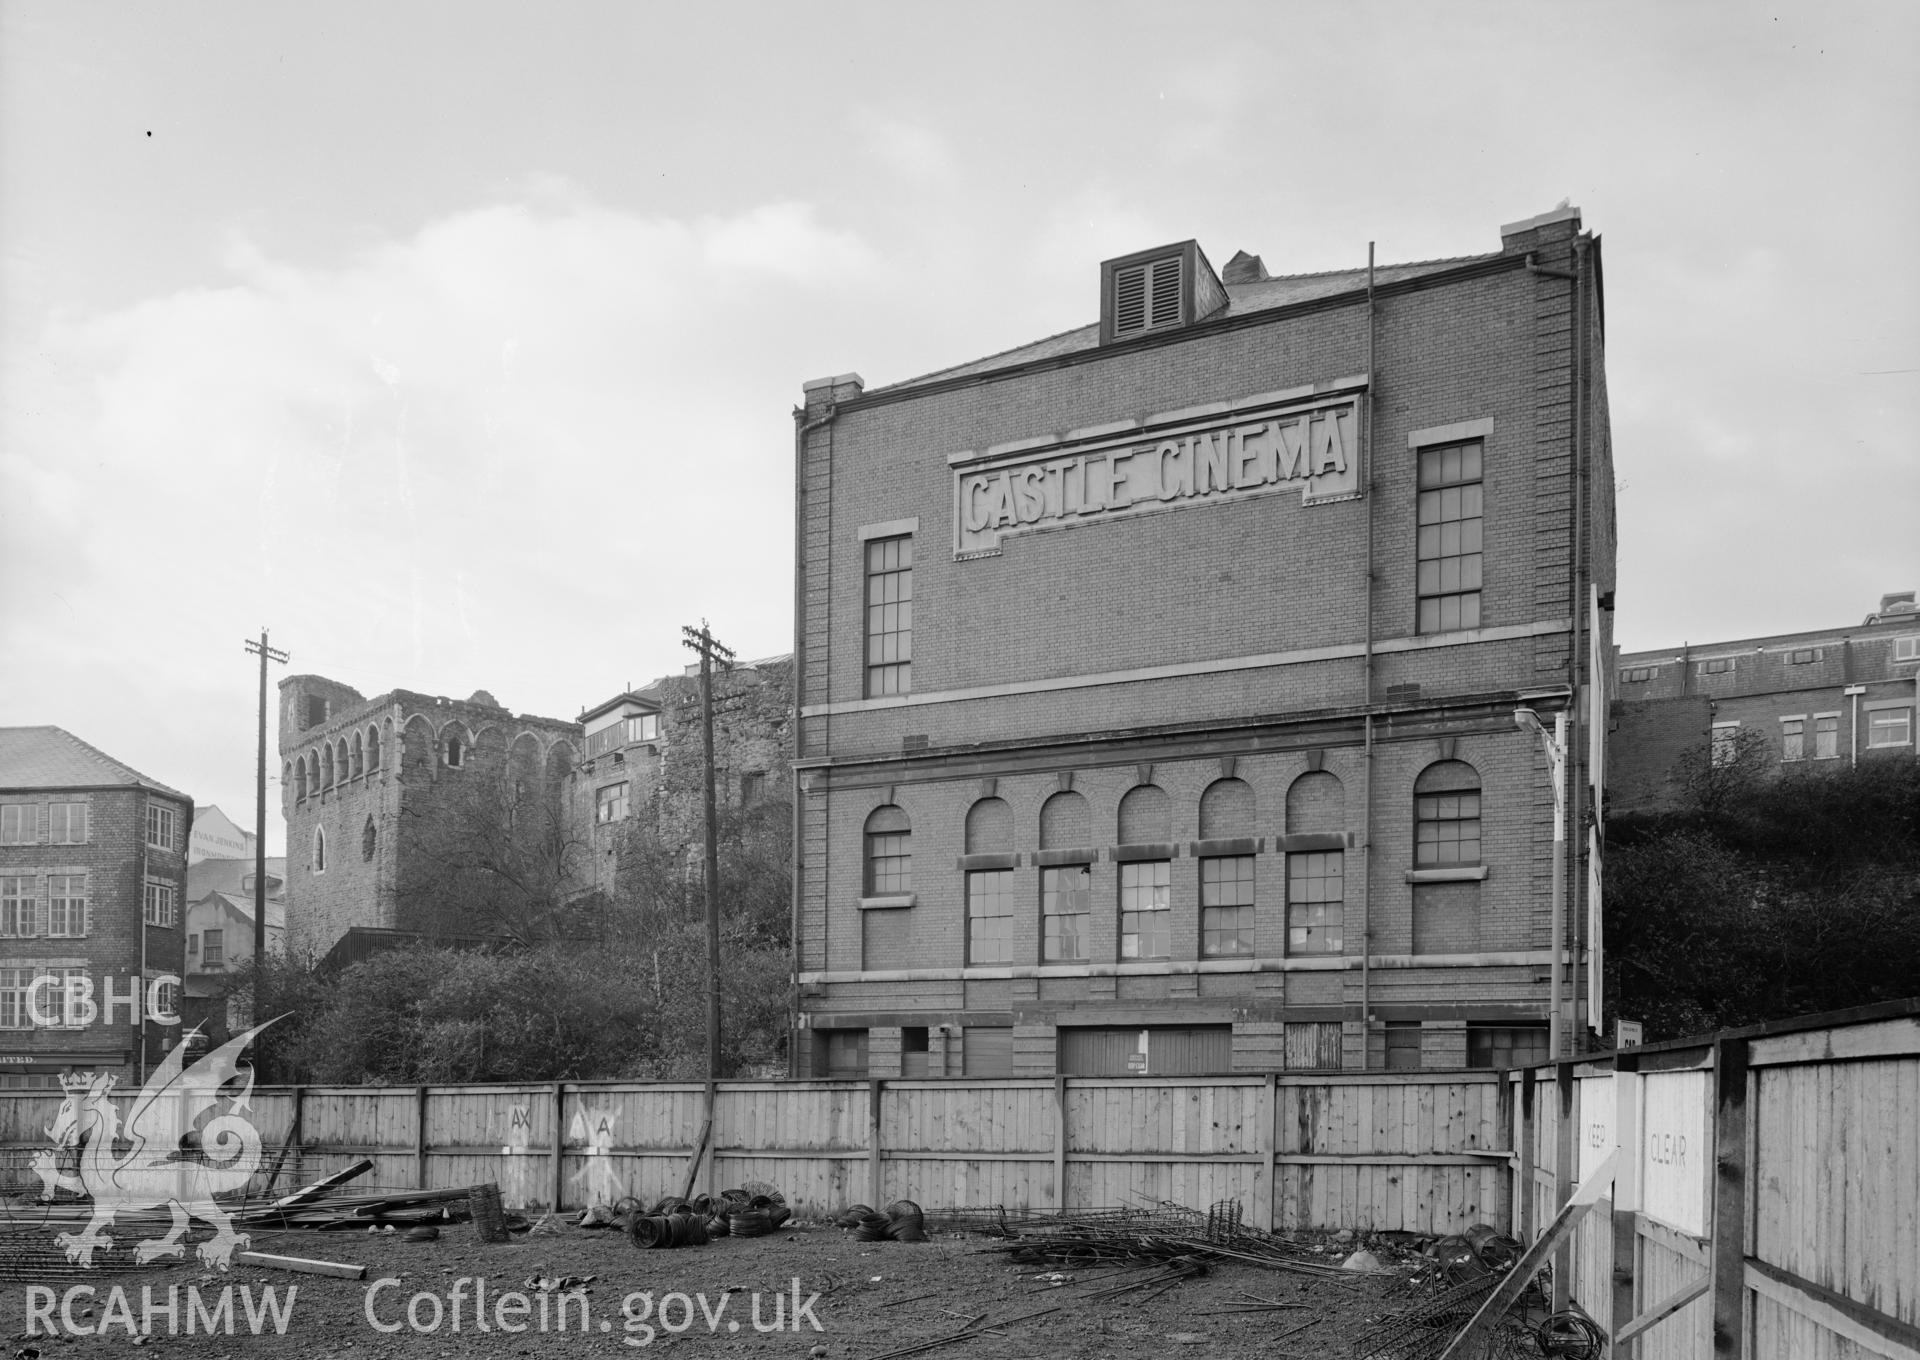 D.O.E photograph of Swansea Castle and Castle Cinema.